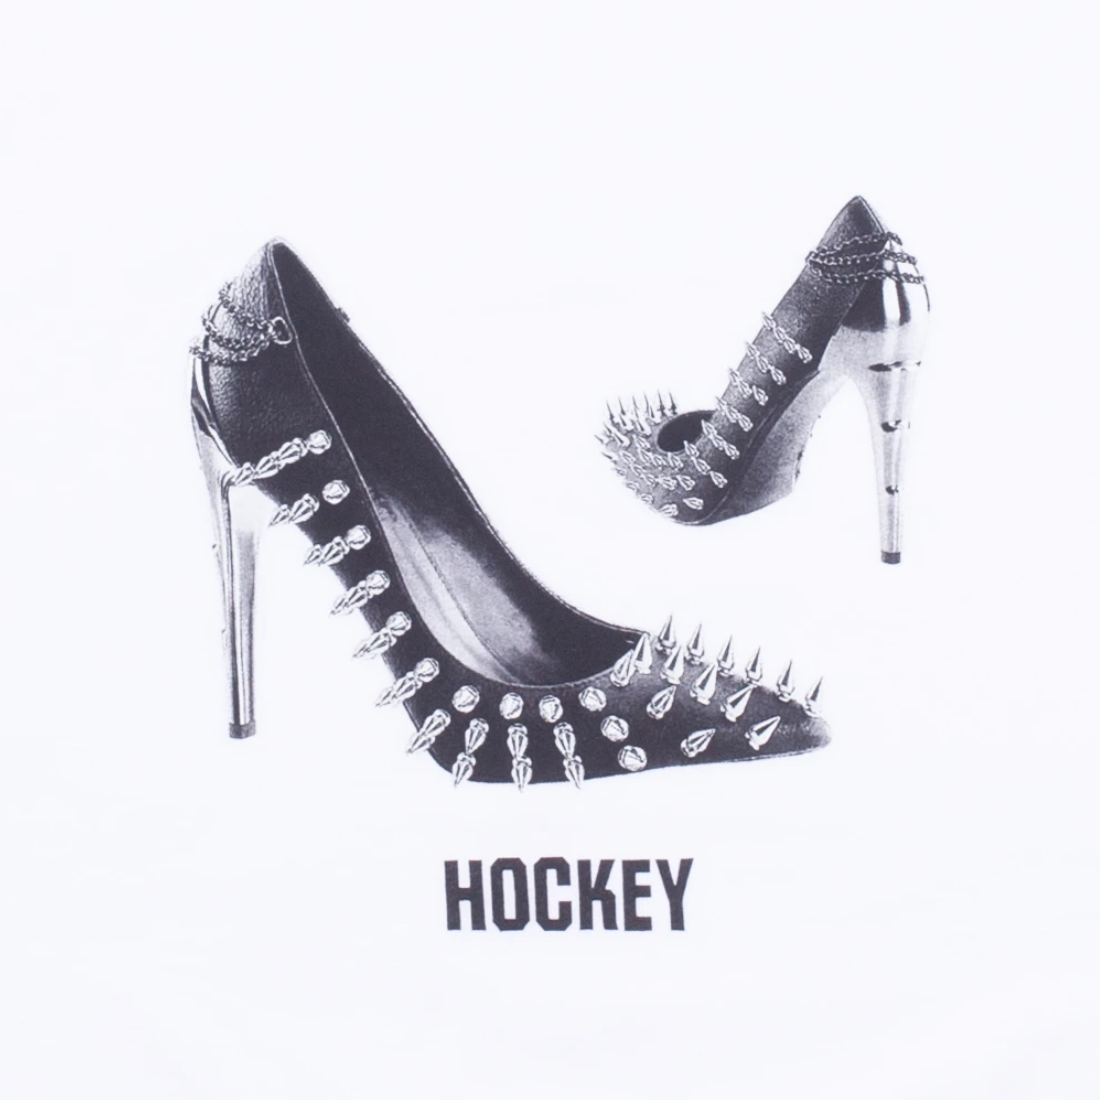 【Hockey】Spiked Heel Tee - White